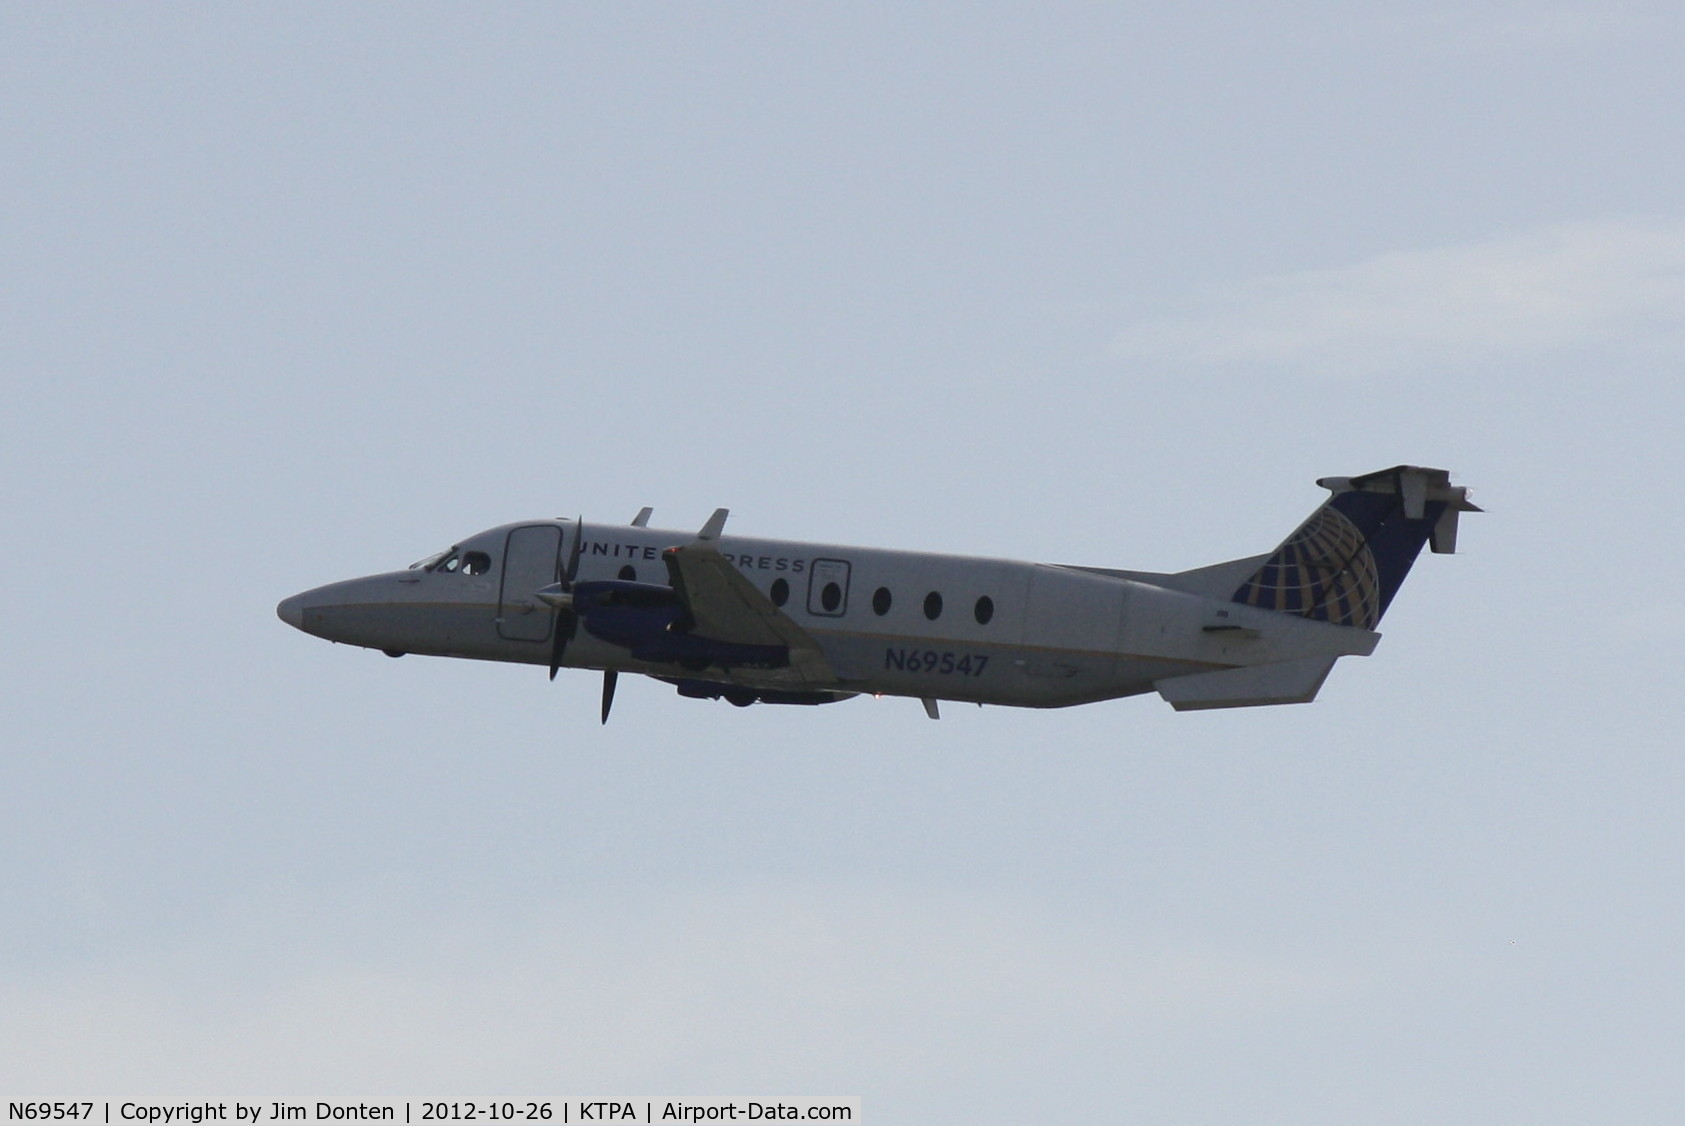 N69547, 1995 Beech 1900D C/N UE-189, United Flight 3994 operated by Silver (N69547) departs Tampa International Airport enroute to Tallahassee Regional Airport